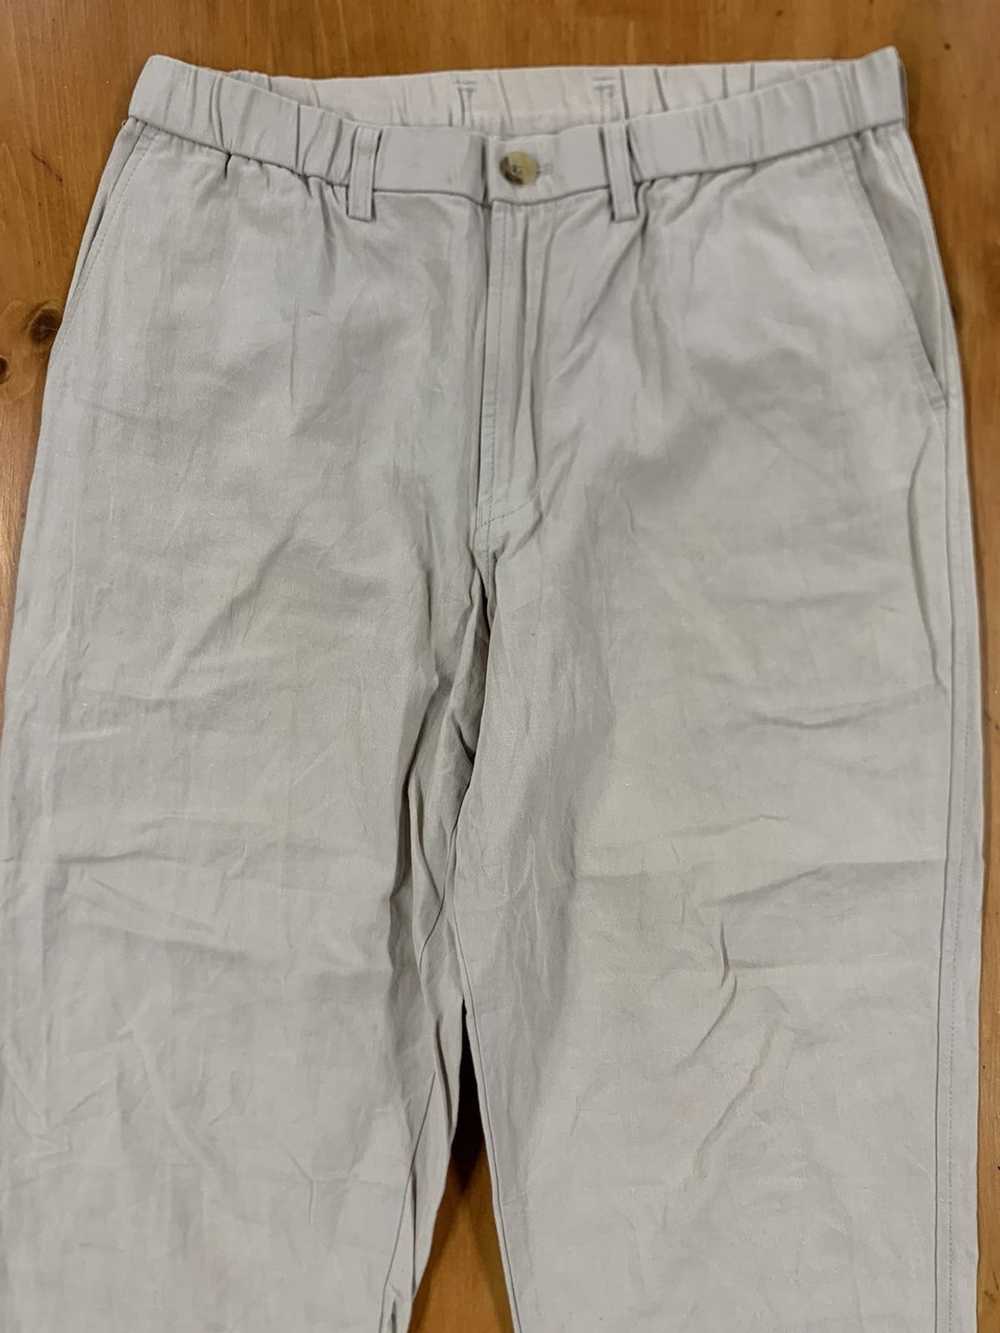 Japanese Brand Issye Miyake Khaki Pants - image 2